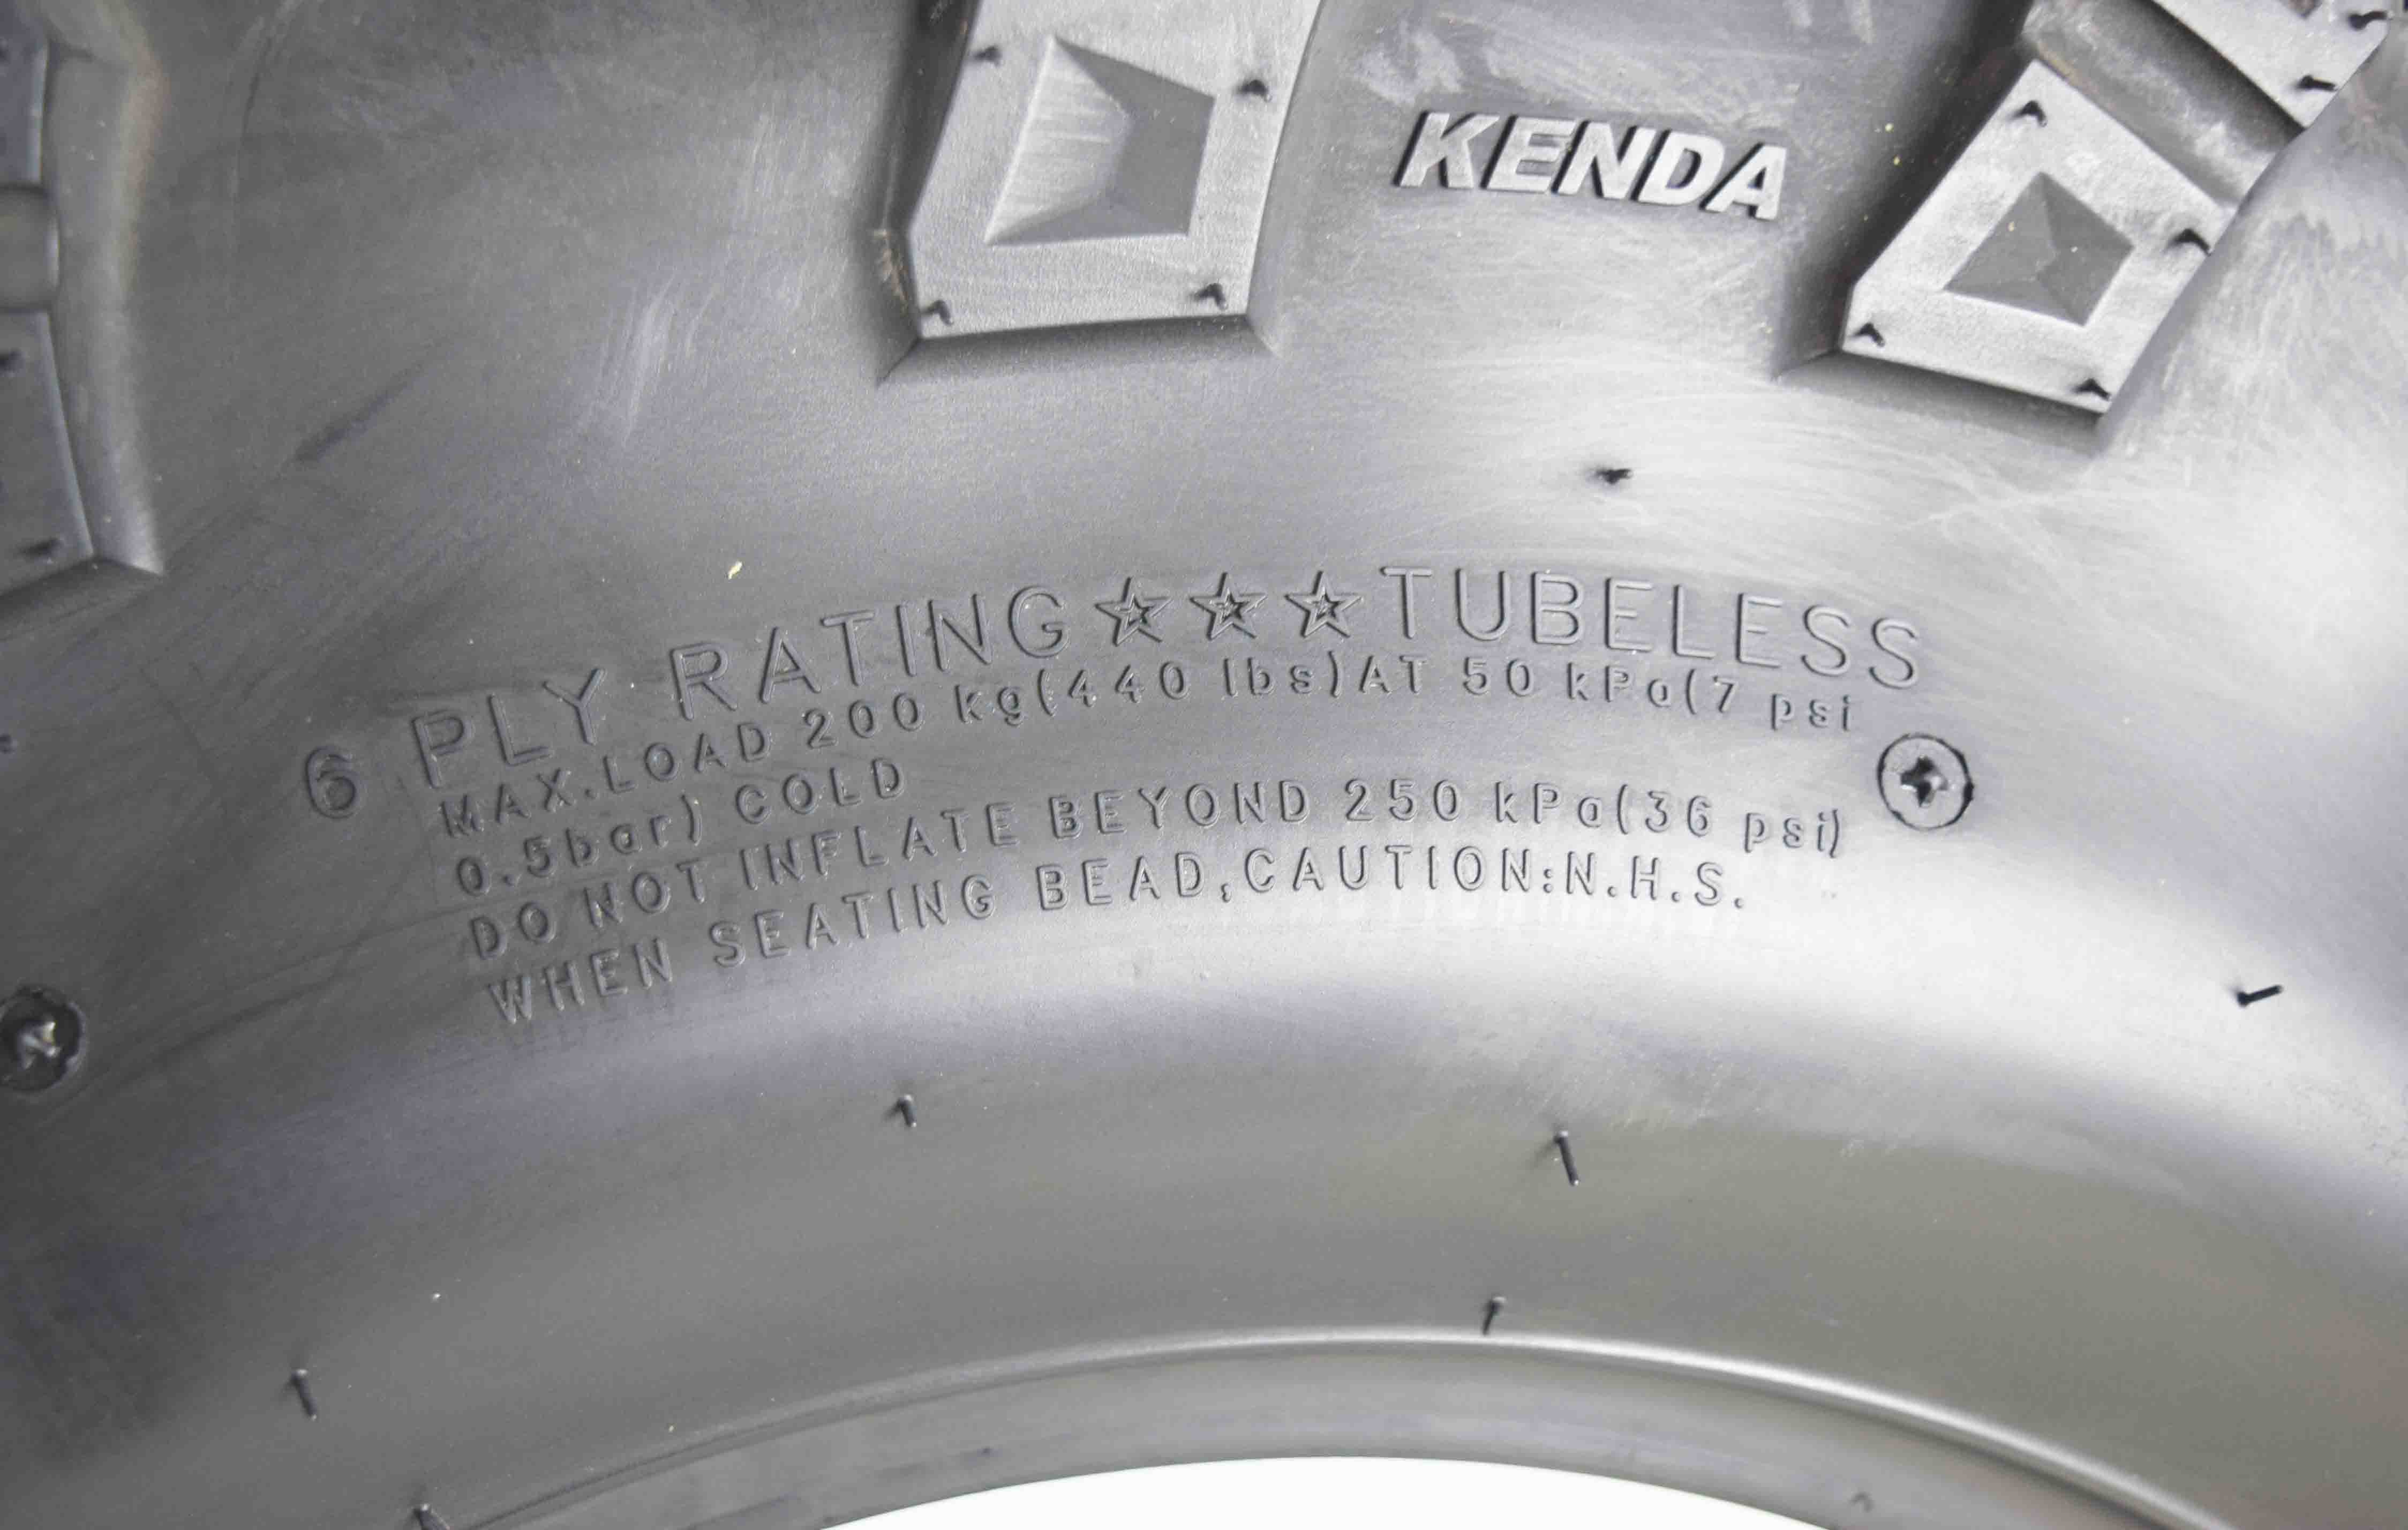 Kenda Bear Claw EVO  27x9-12 Front ATV/UTV Tires 2 Pack with Bottle Opener Keychain